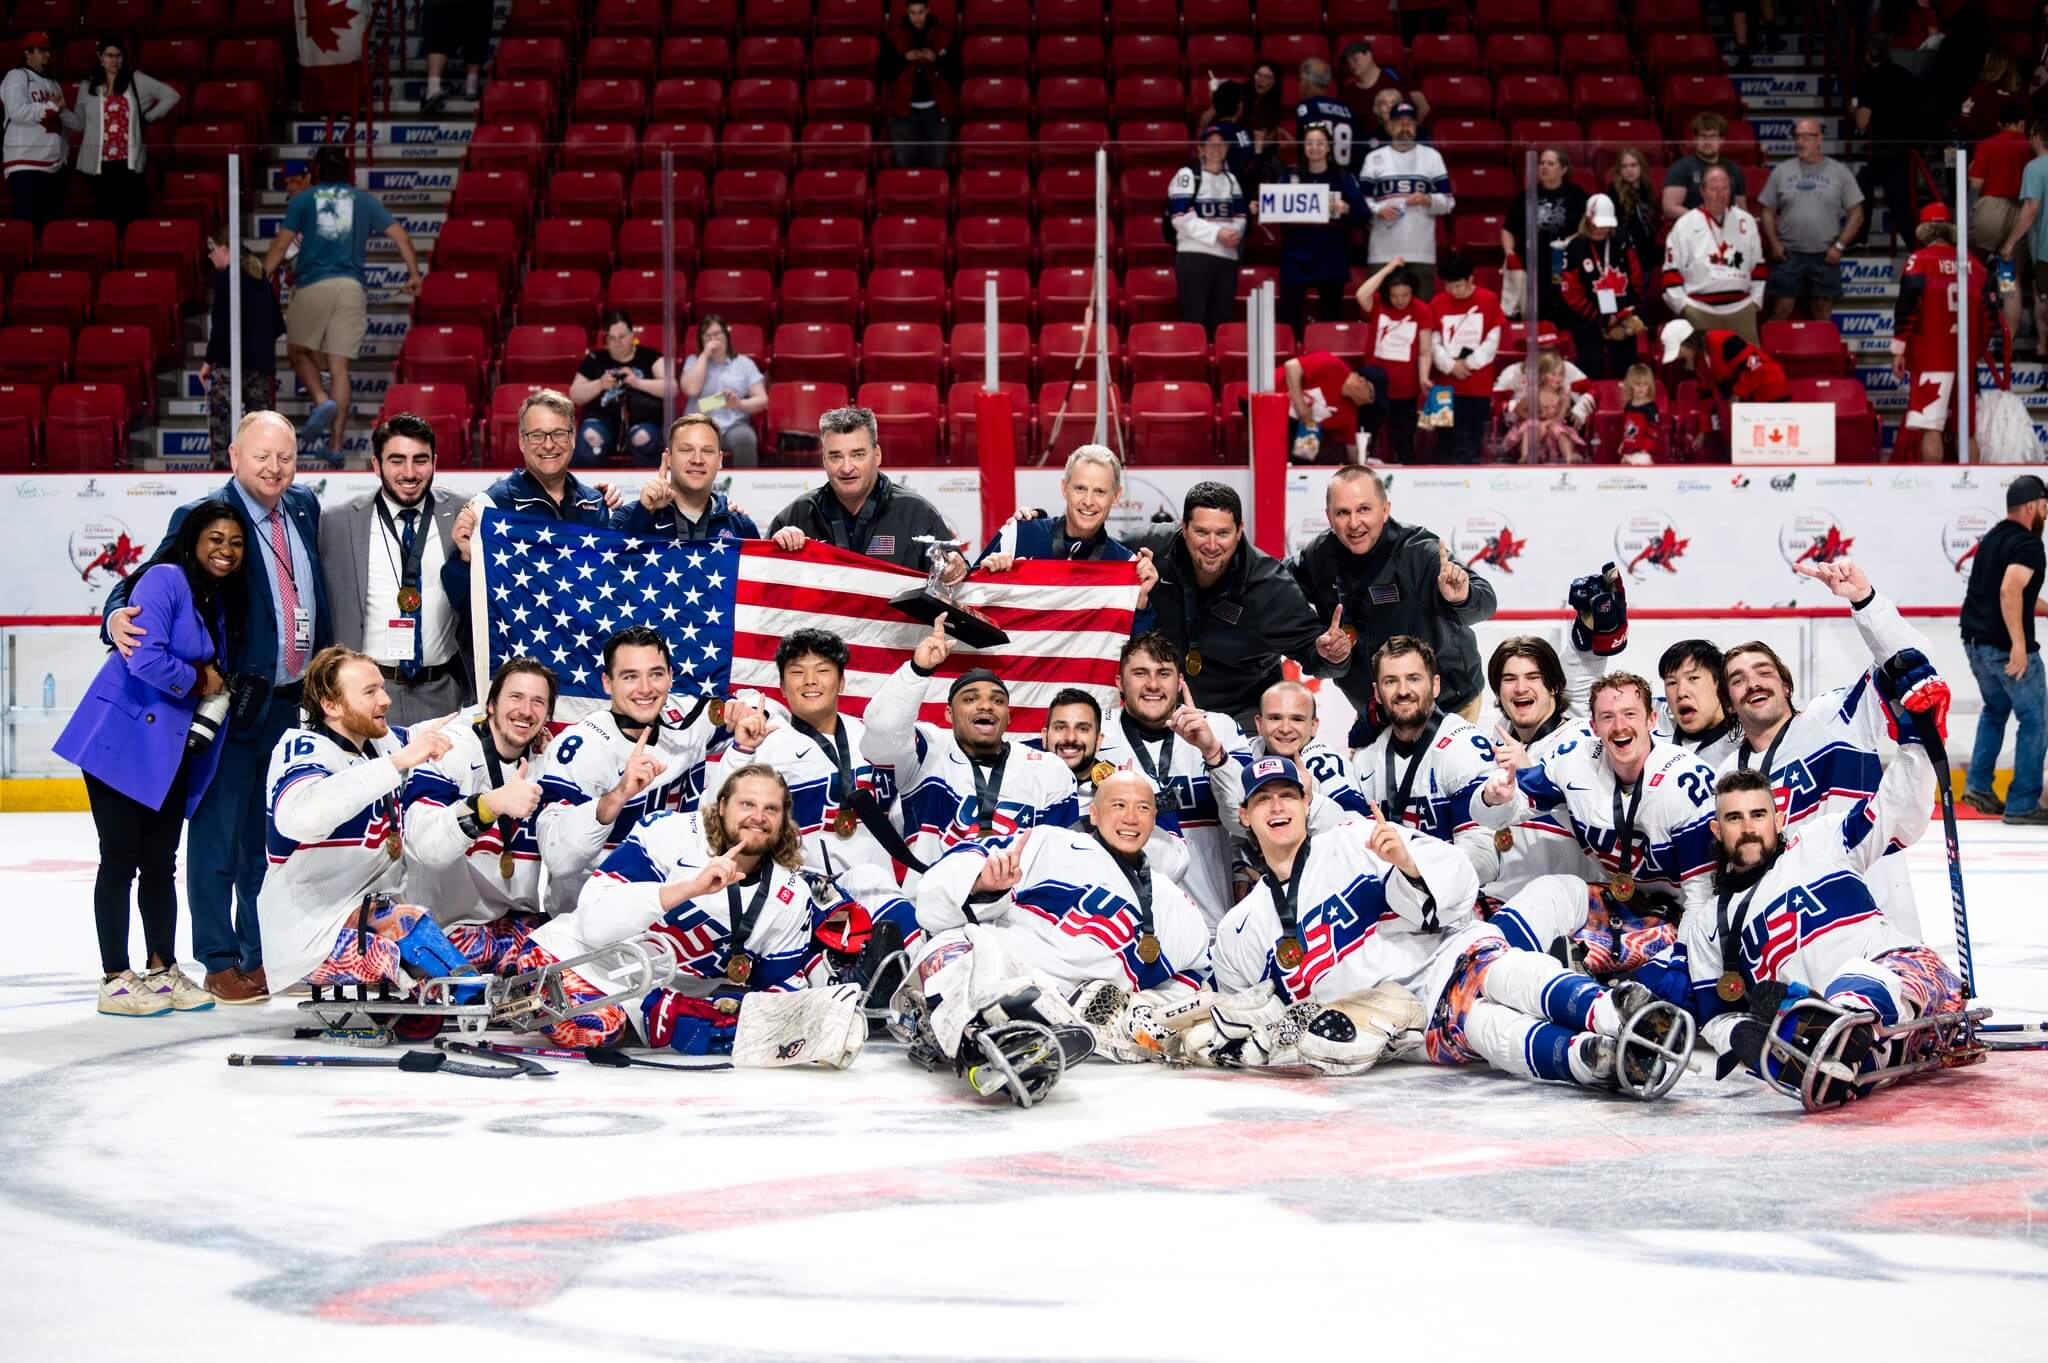 USA Hockey | Organizational Profile, Work & Jobs